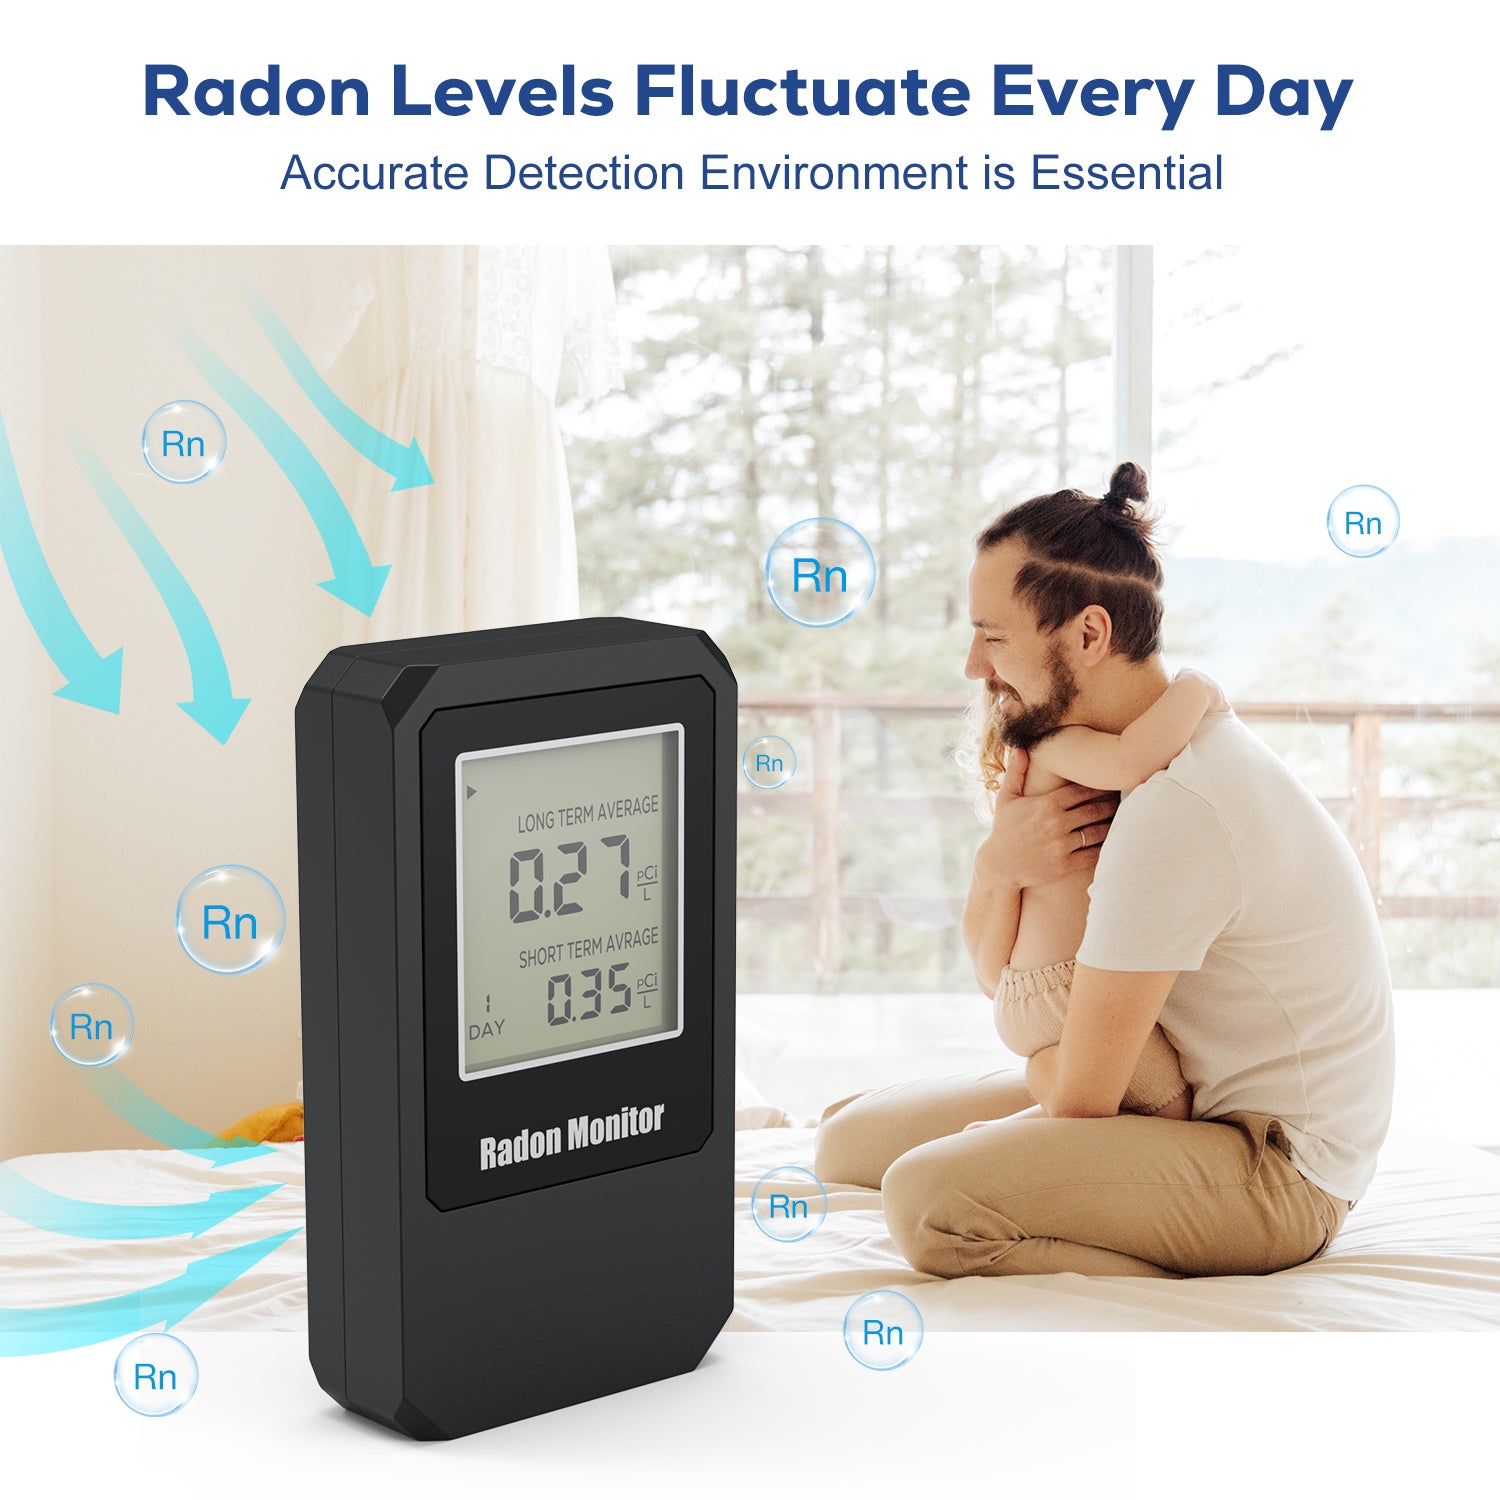 LifeBasis Radon Detector Portable Radon Tester with Large Screen For H